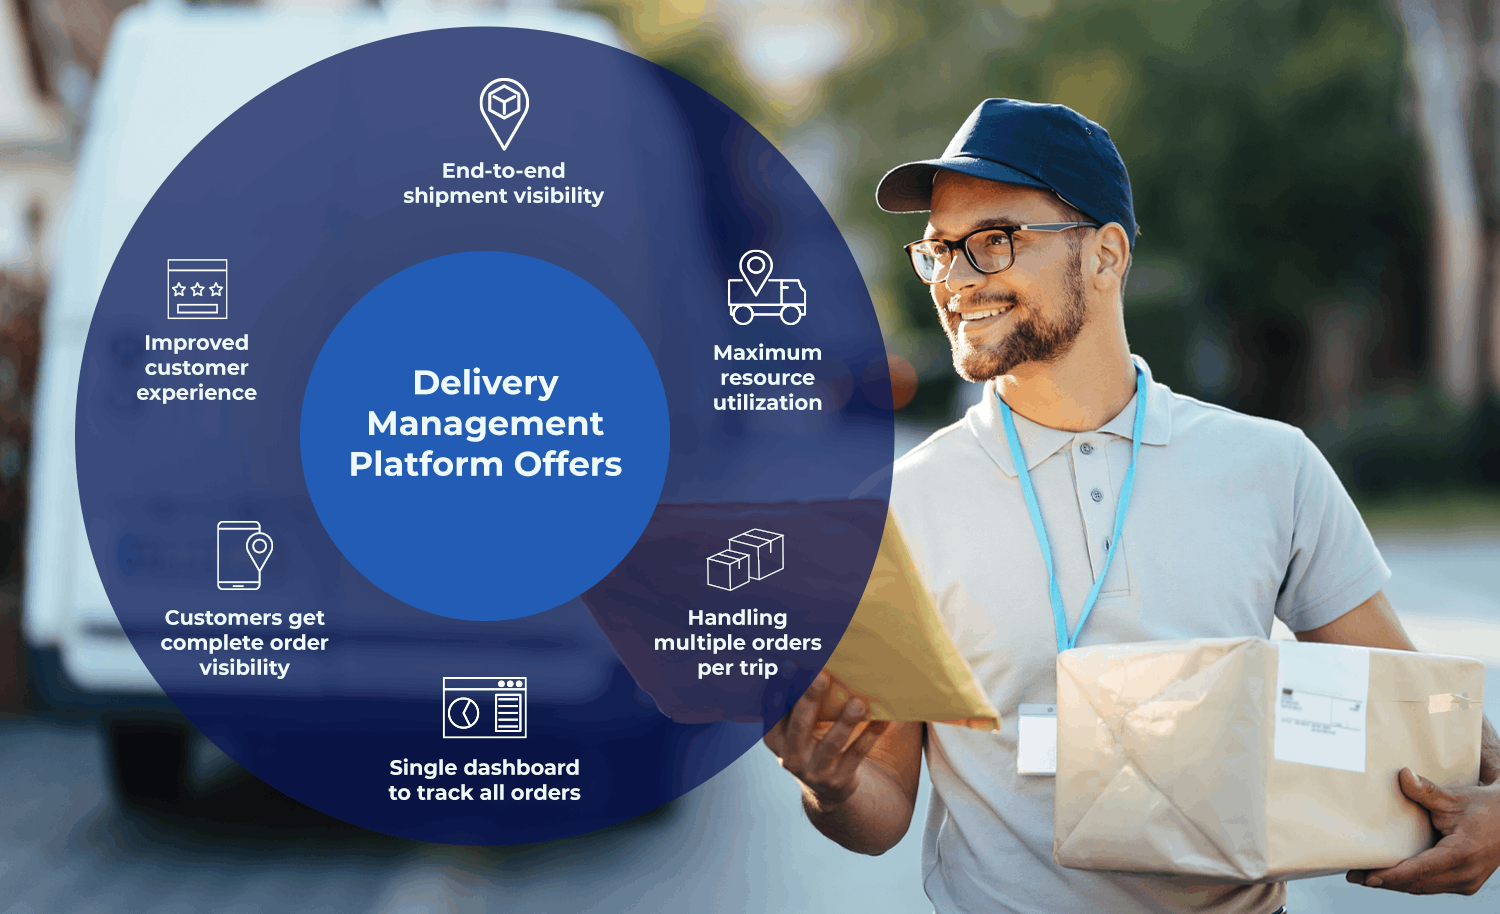 What does delivery management platform offer?